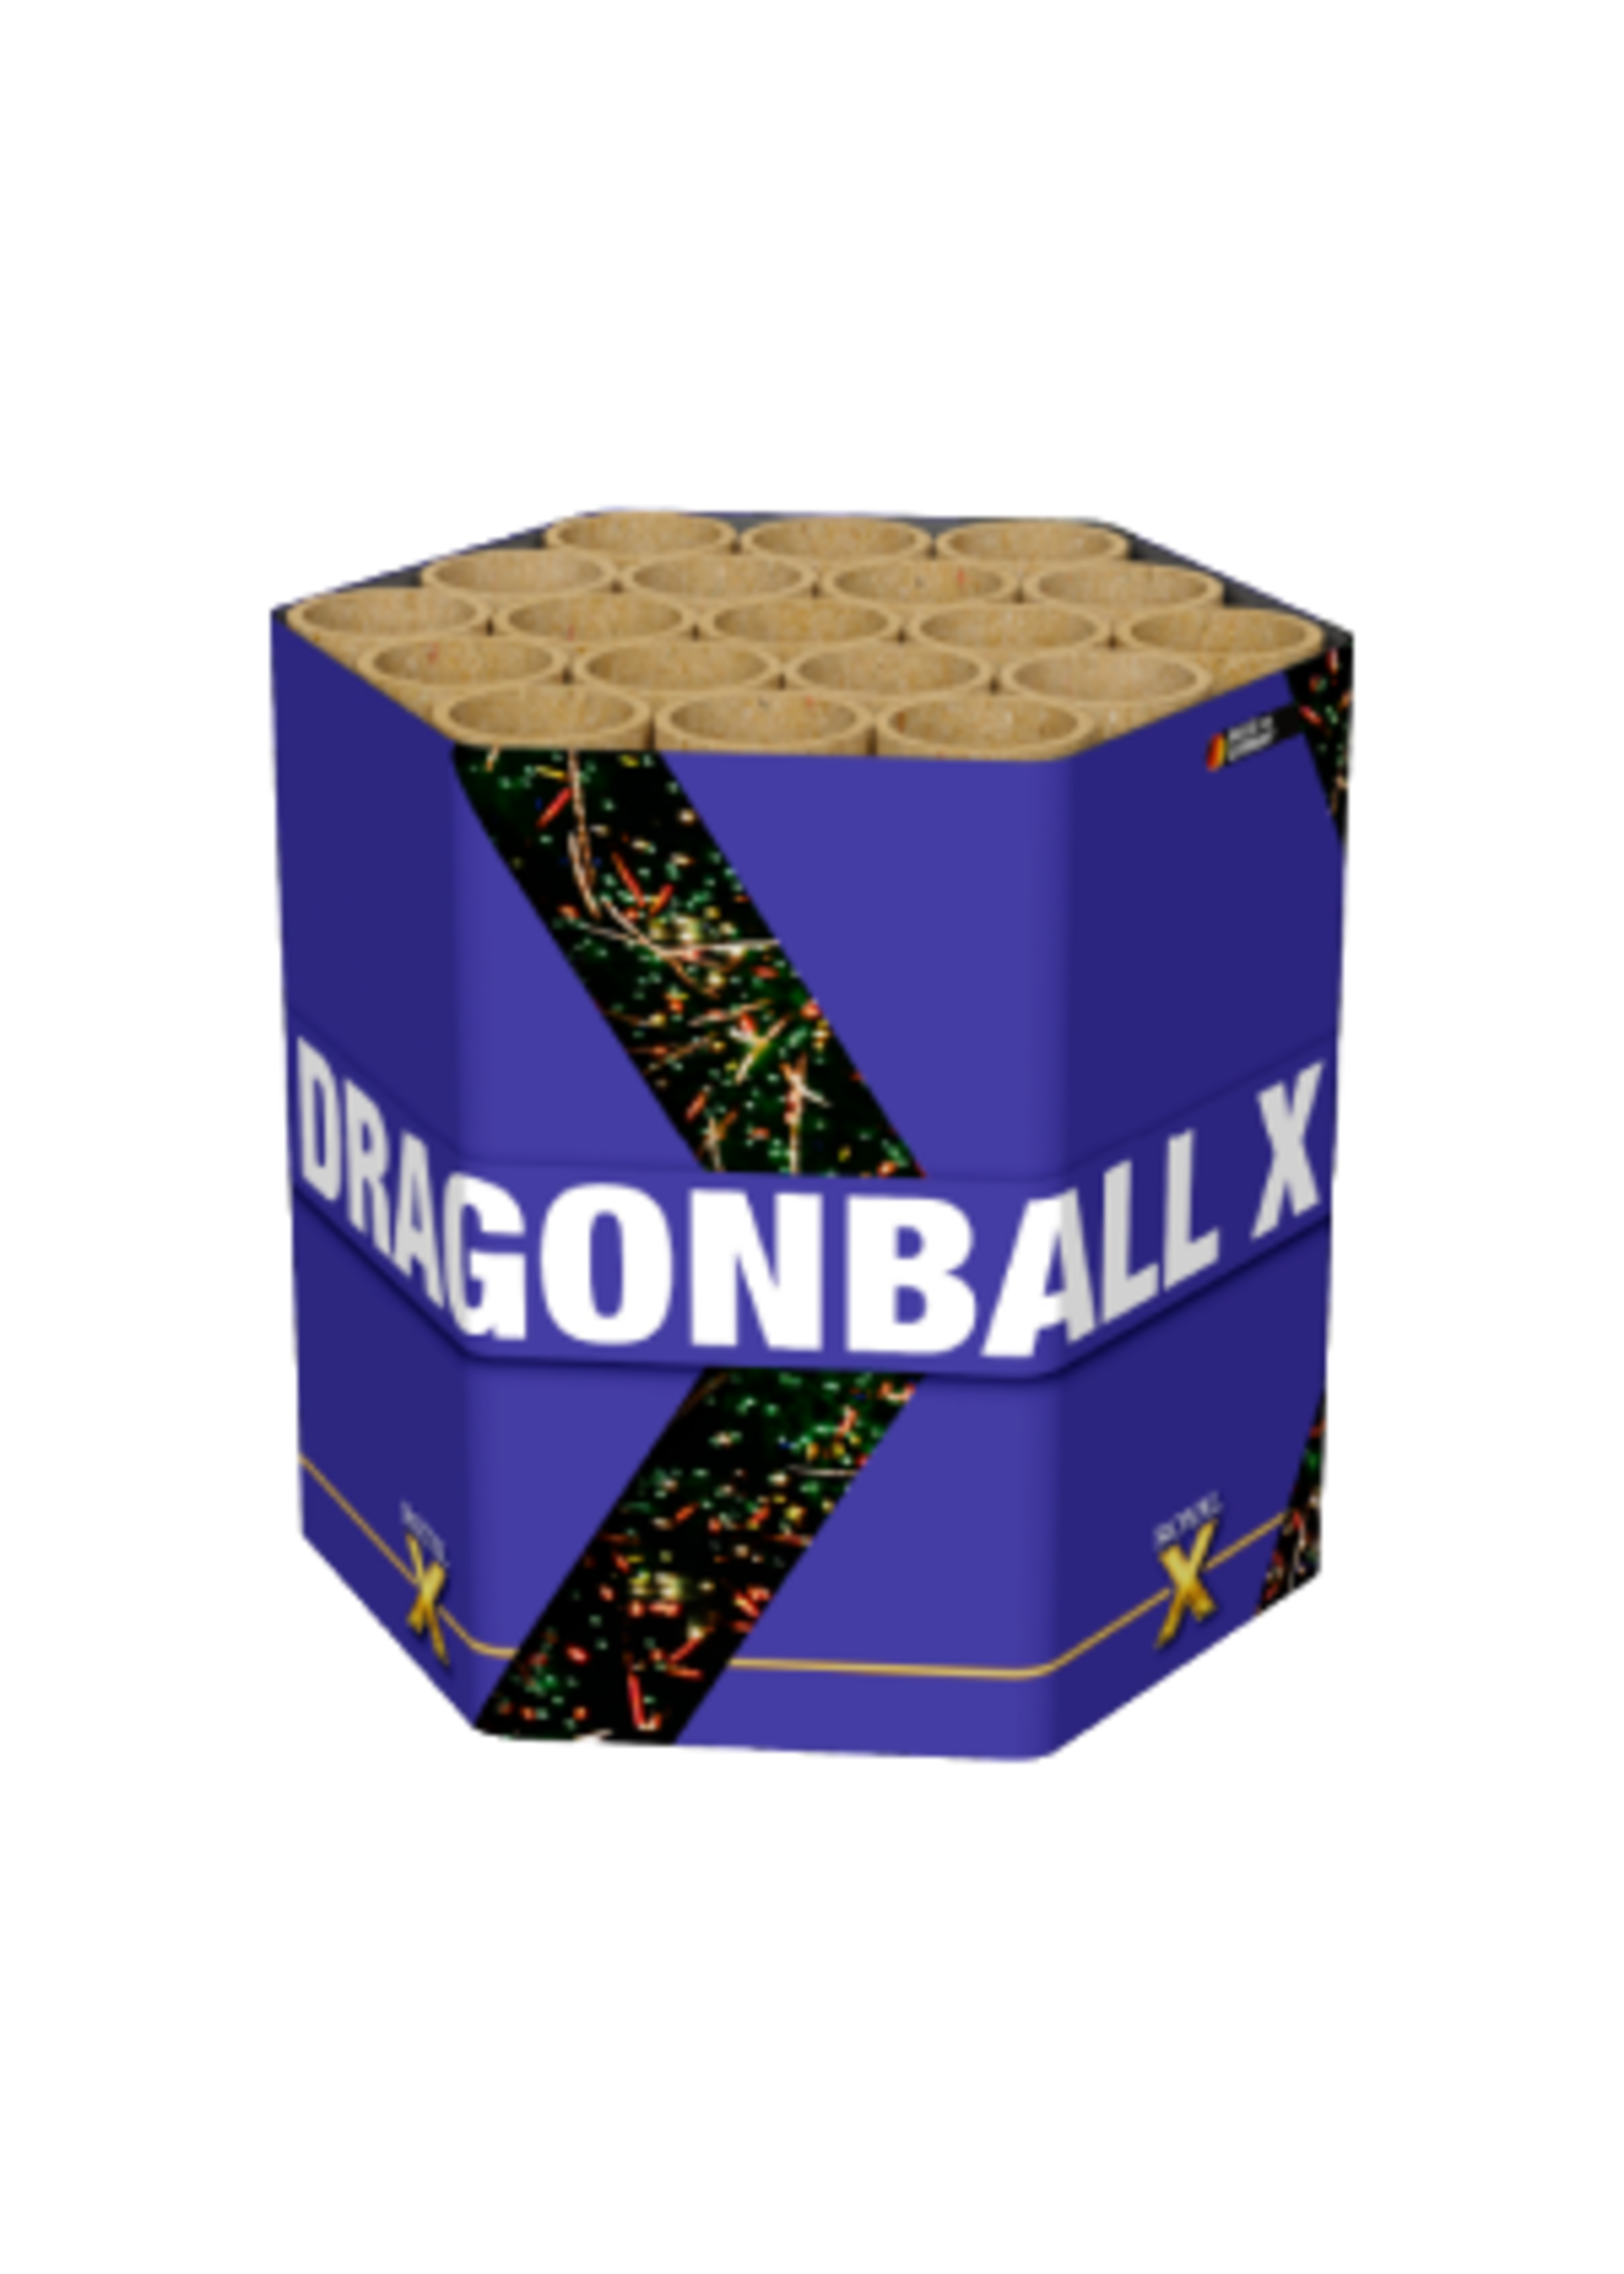 Lesli Vuurwerk Dragonball X 19 shots